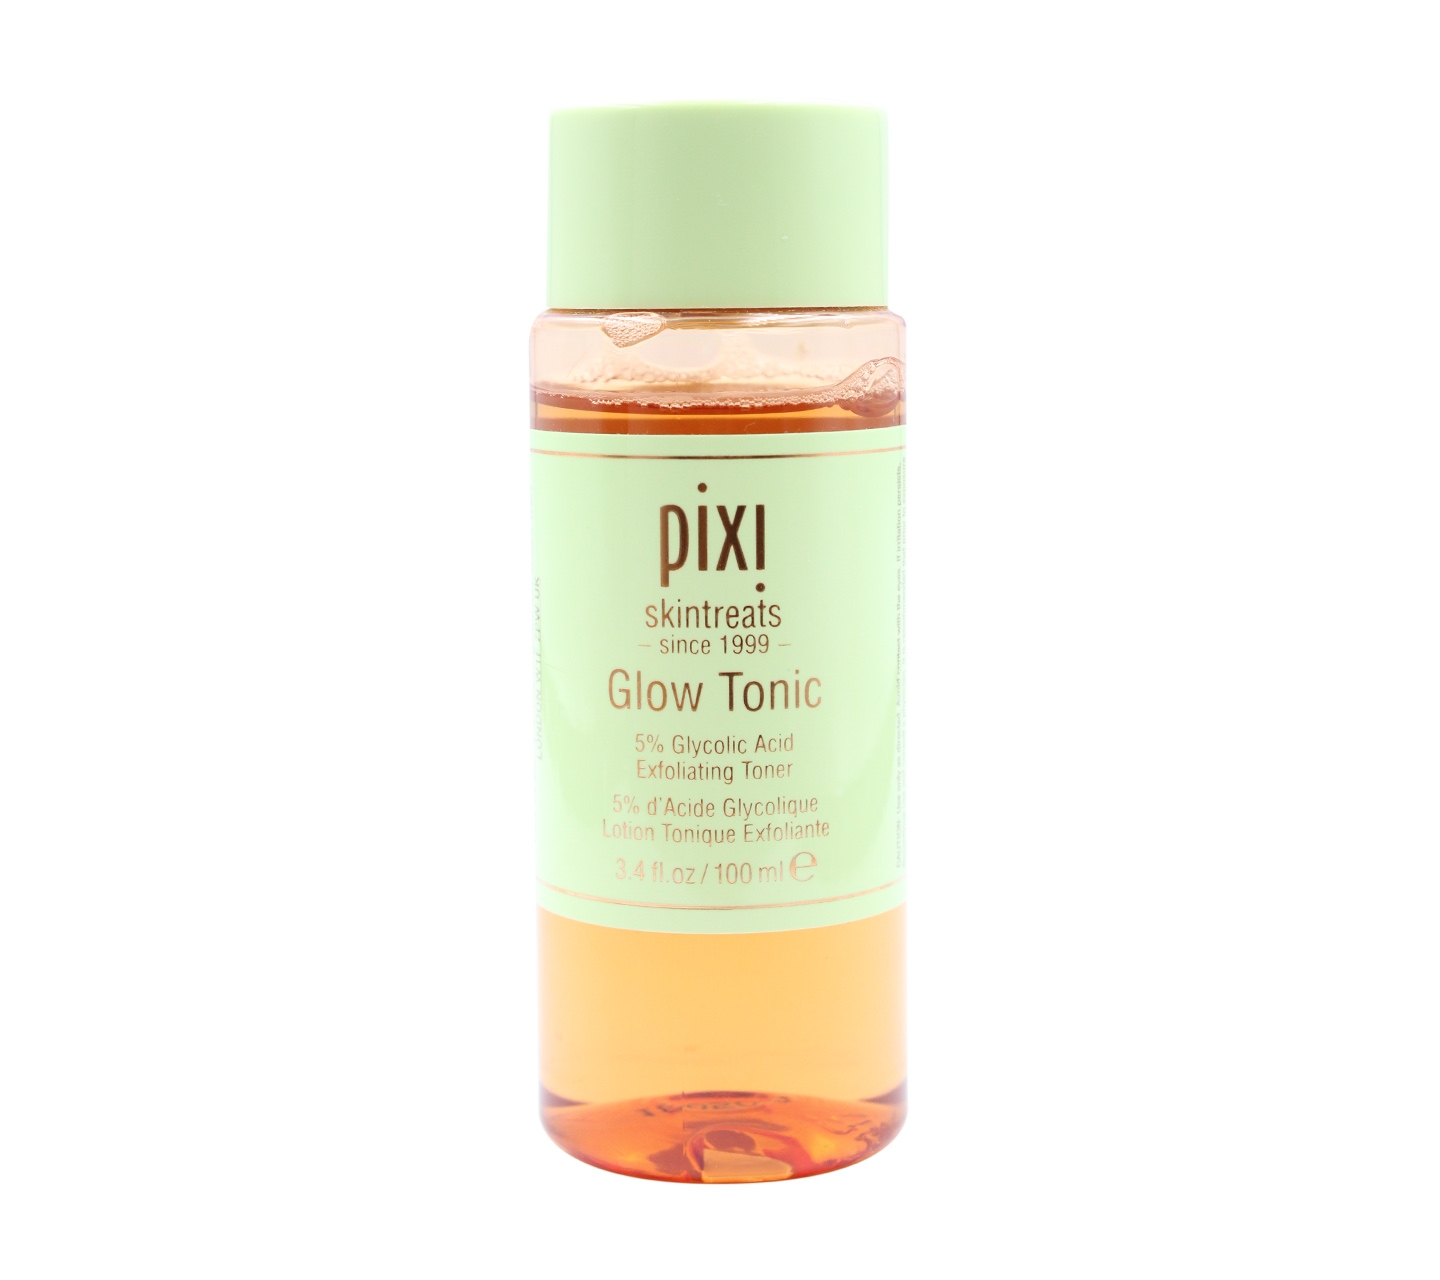 Pixi Skintreats Glow Tonic Skin Care